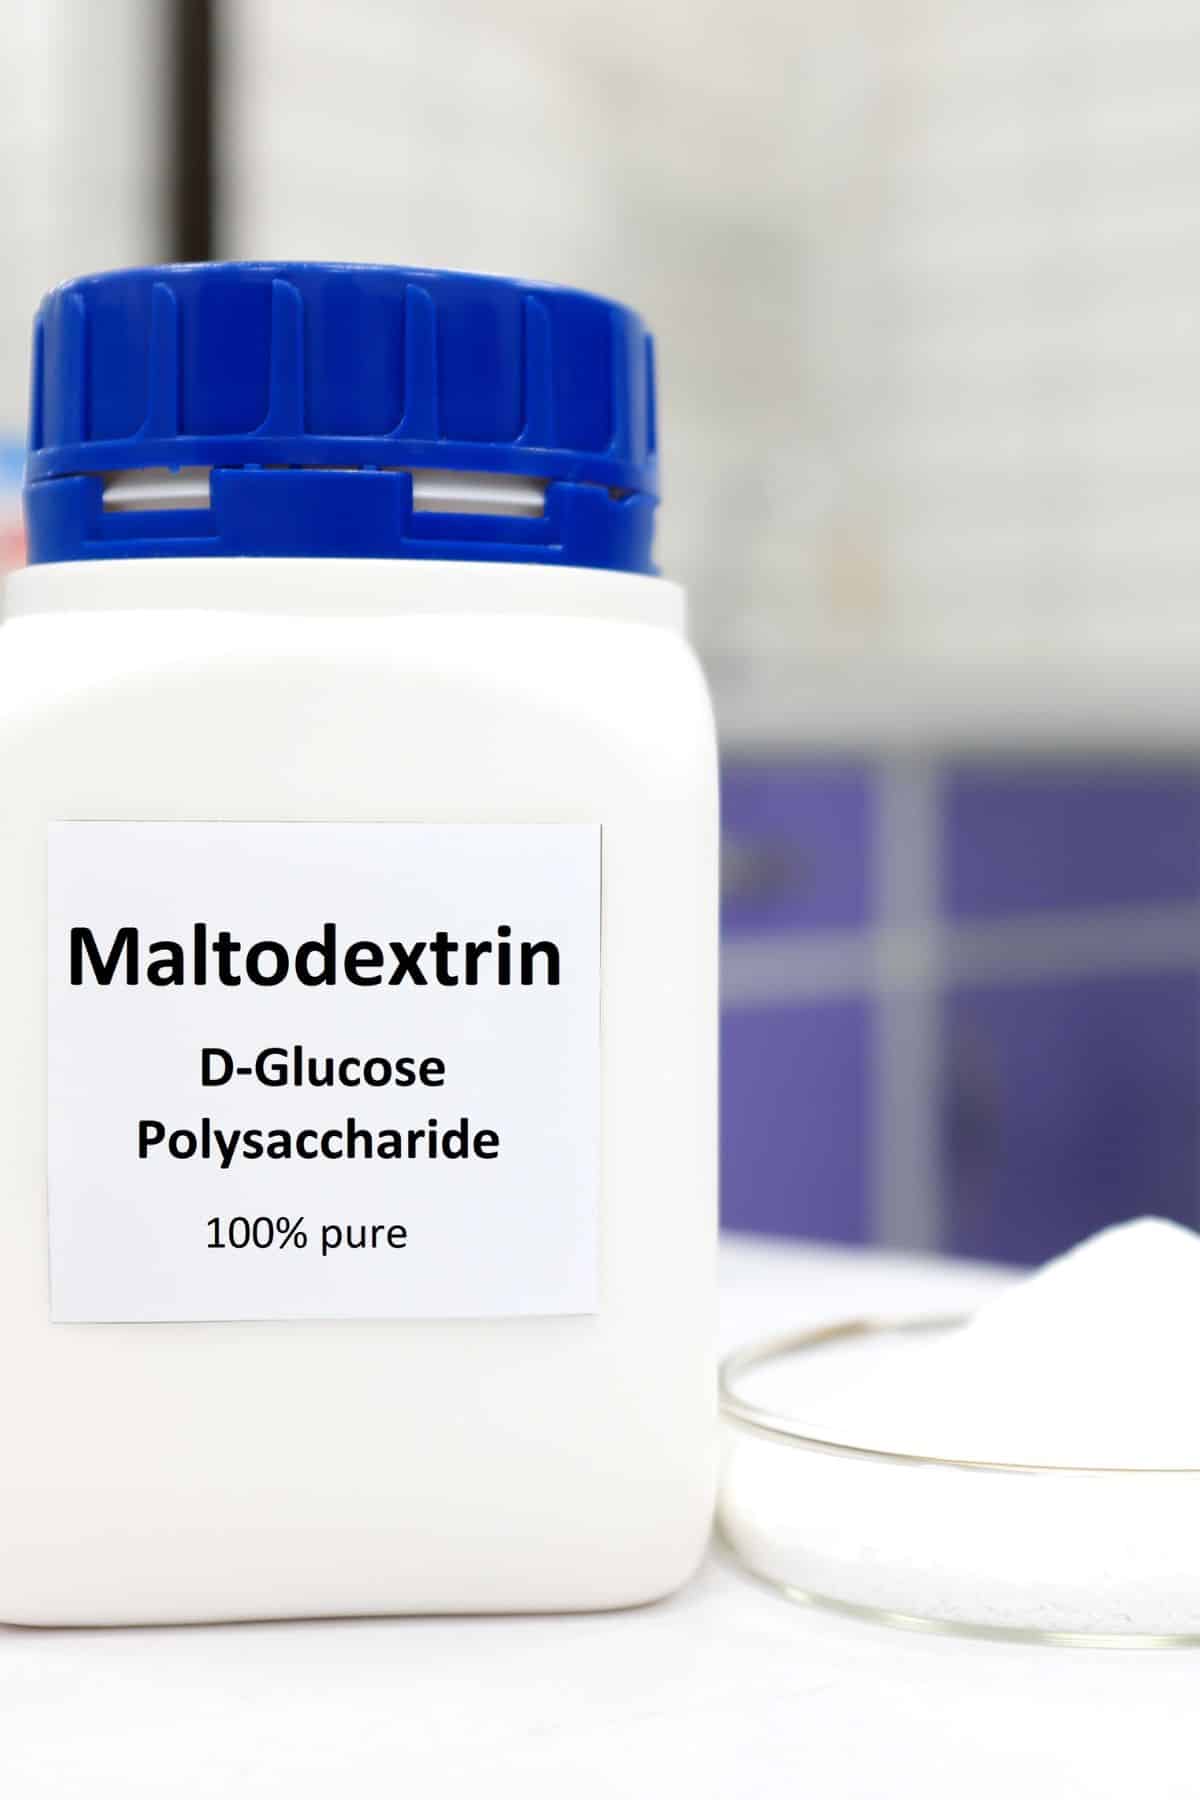 a bottle labeled "Maltodextrin" next to a beaker full of maltodextrin.